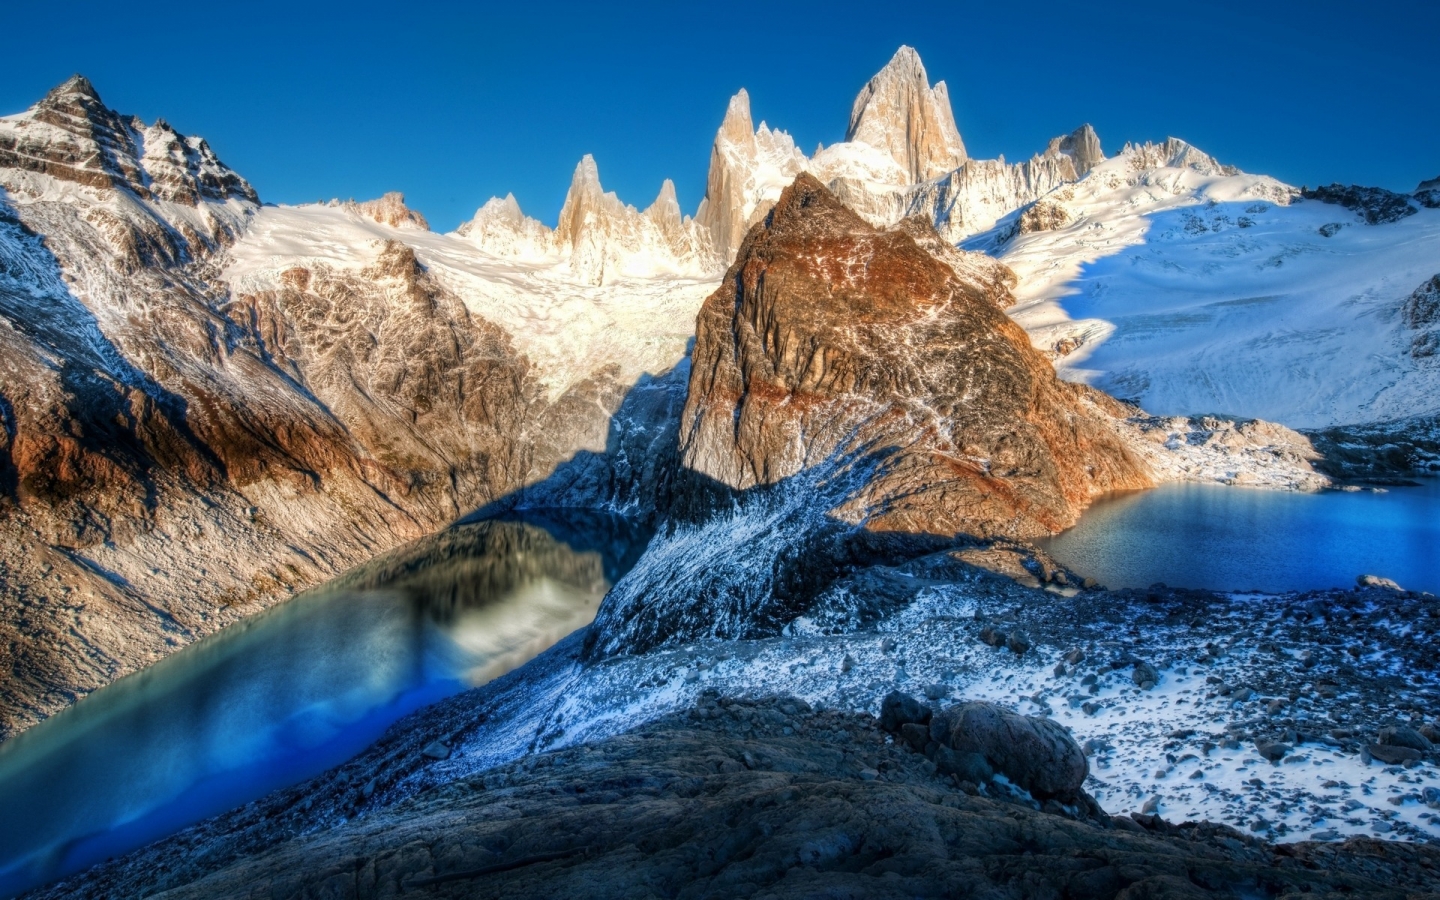 Mountain Rocks Landscape for 1440 x 900 widescreen resolution